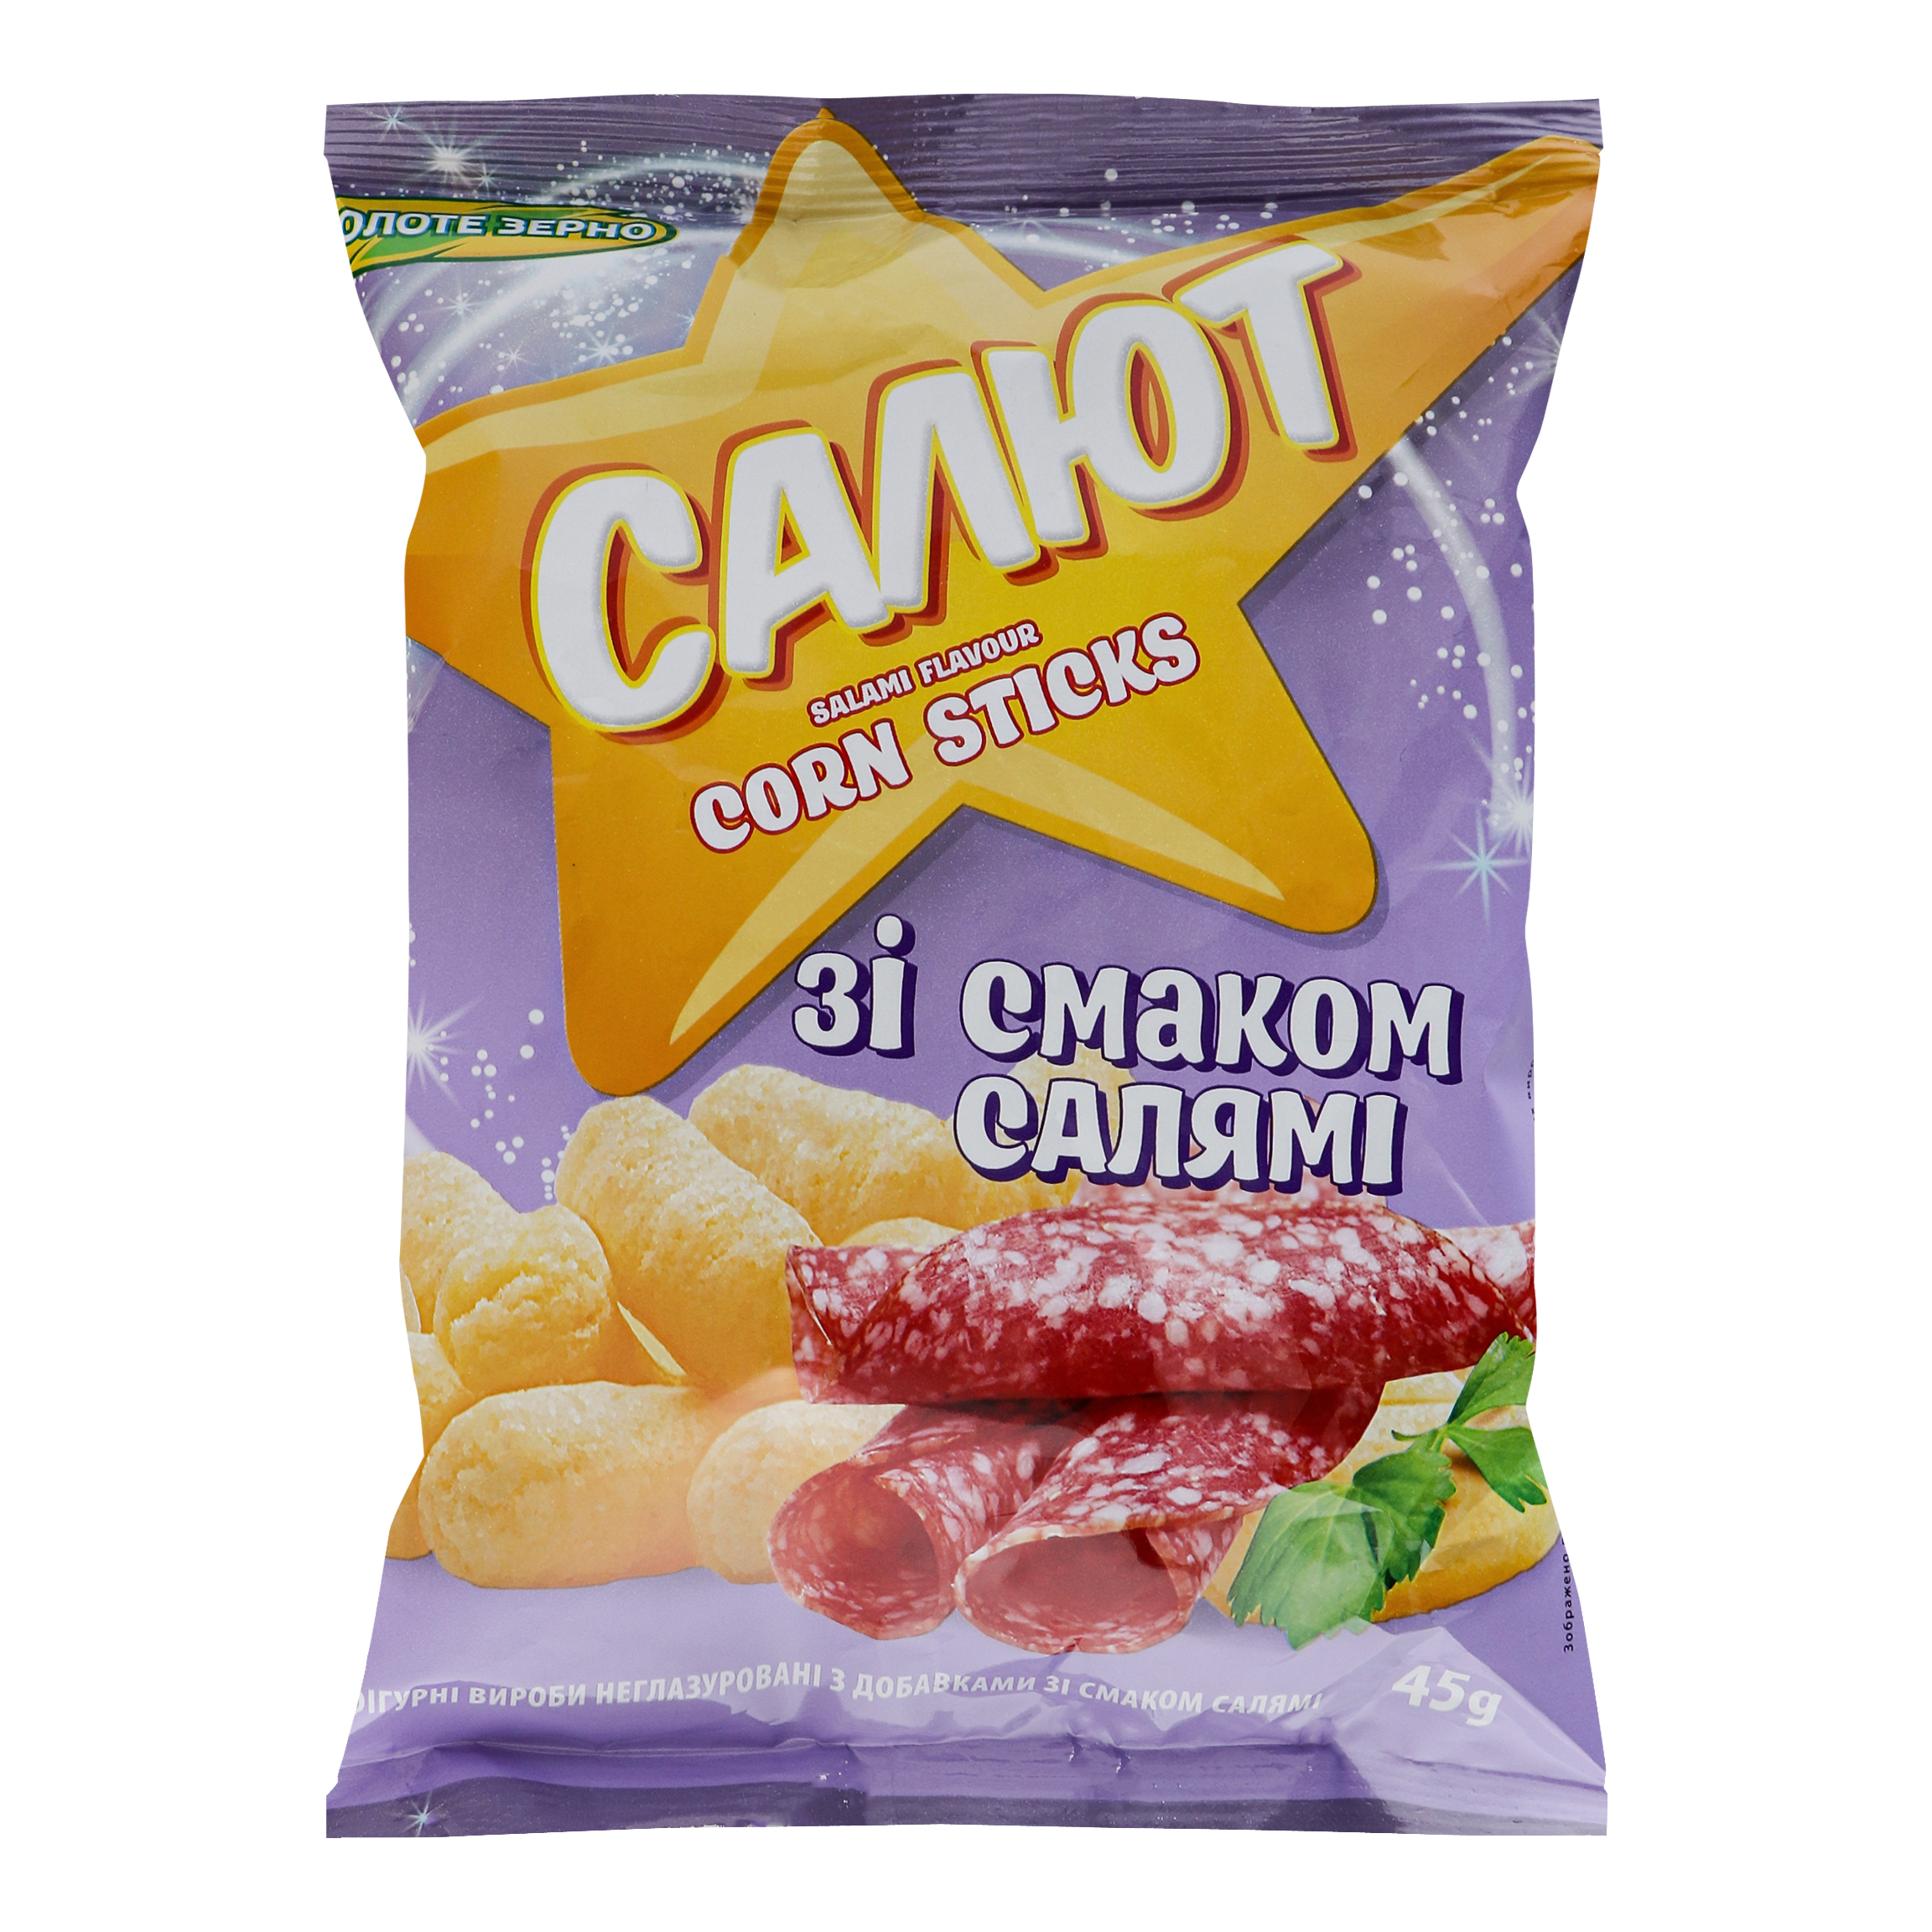 Corn Sticks Zolote Zerno Salyut with Salami Flavor 45g